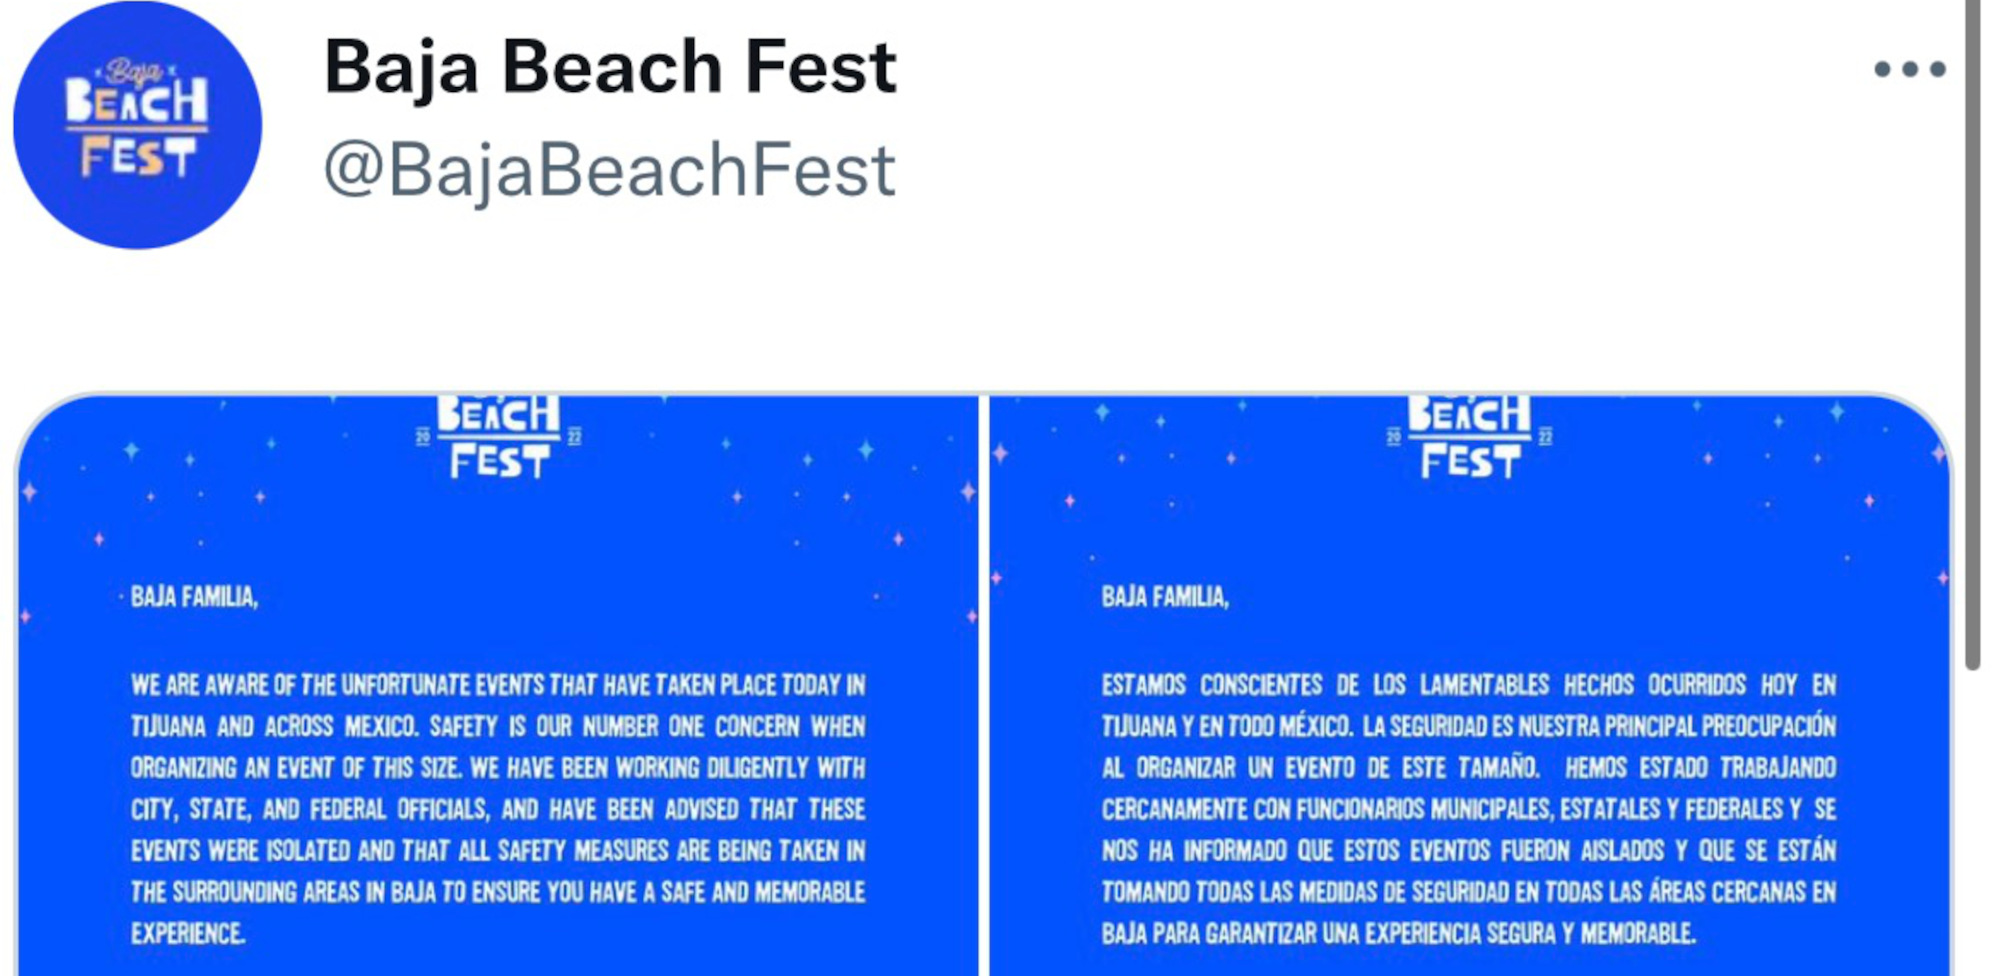 Baja Beach Fest Continues Despite Local Violence